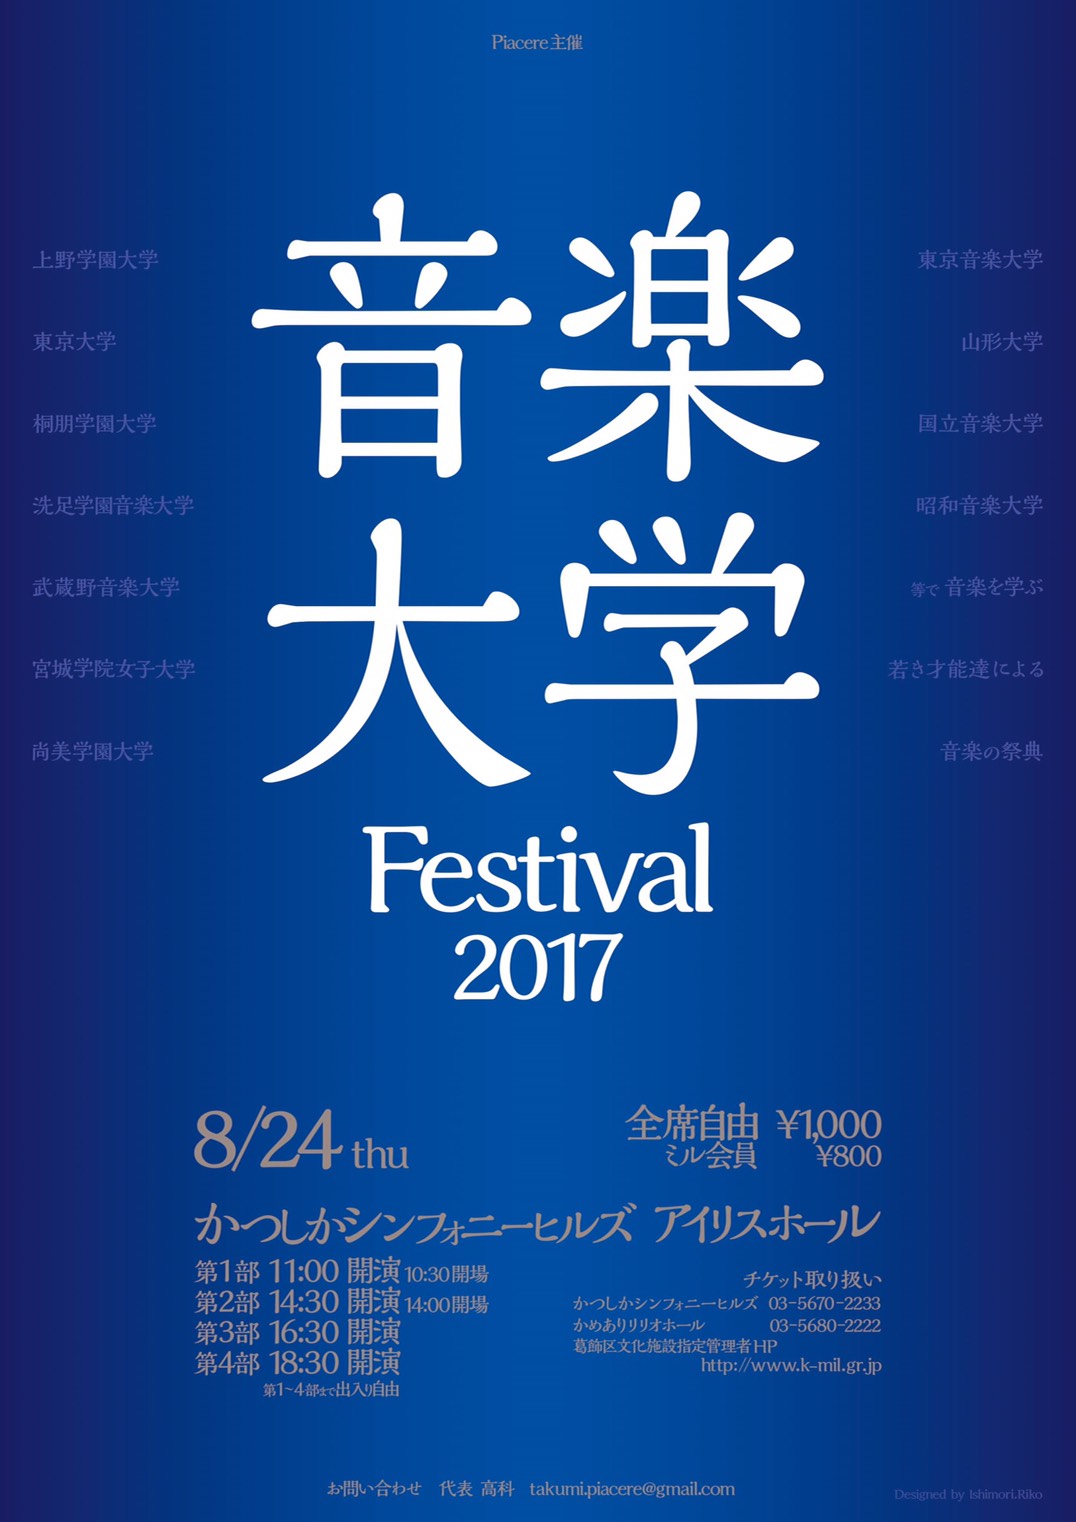 Piacere(音楽大学Festival2017)